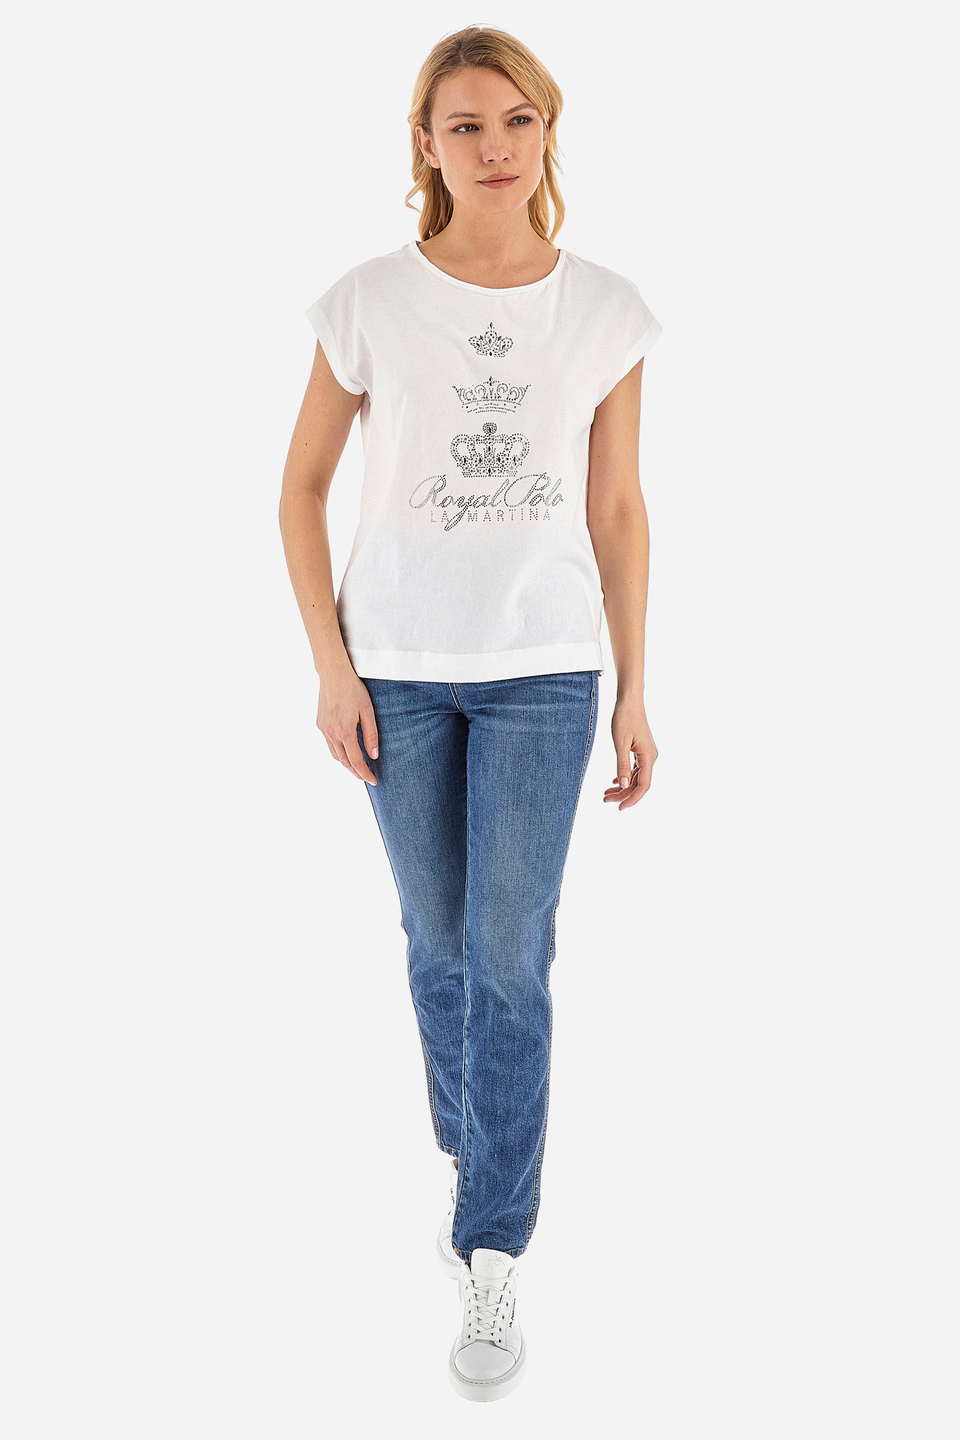 Women's short-sleeved t-shirt in 100% cotton - Vikky | La Martina - Official Online Shop